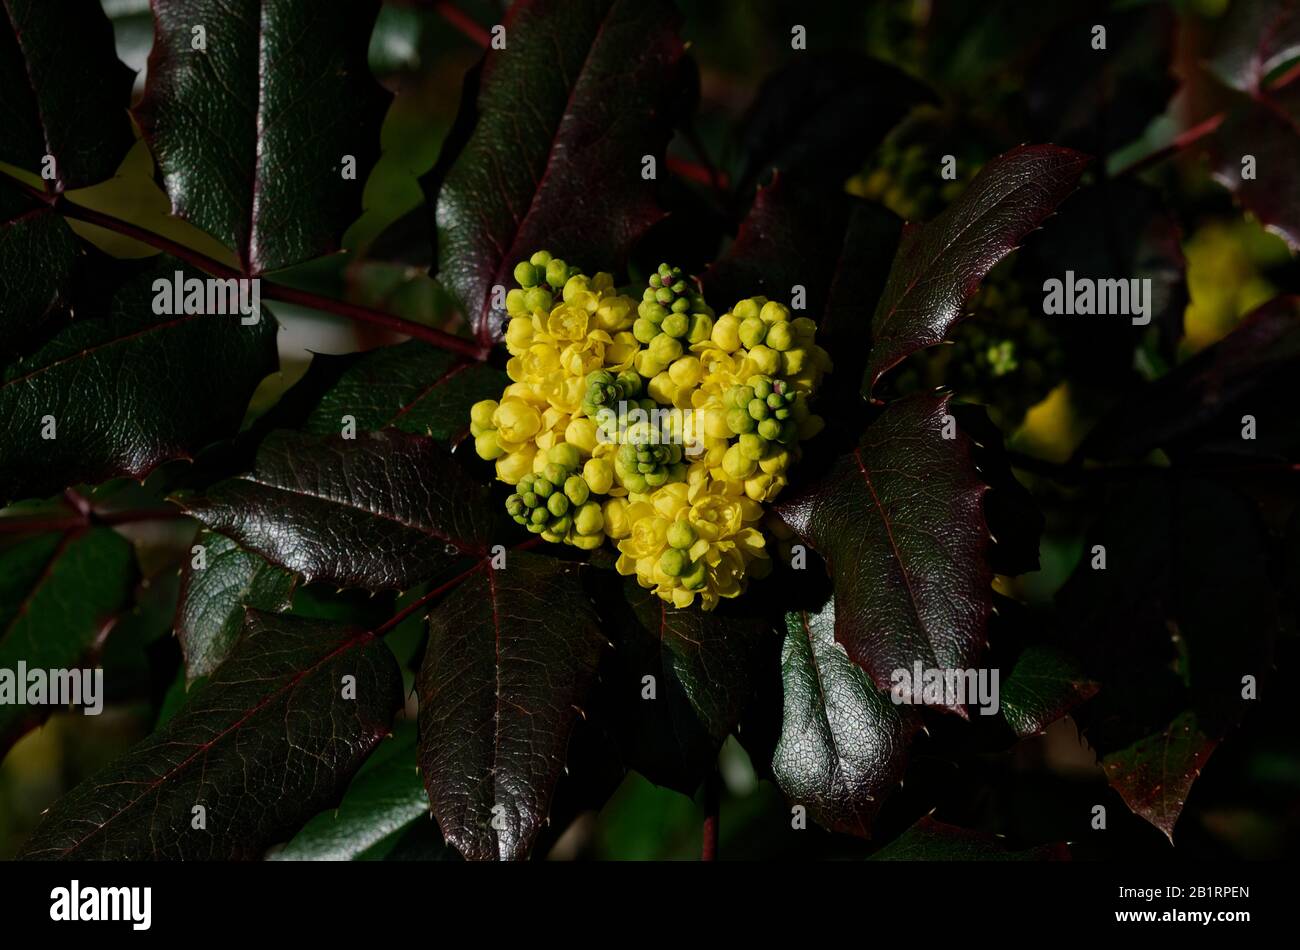 blooming mahonia Oregon grape Berberis aquifolium Pursh Stock Photo